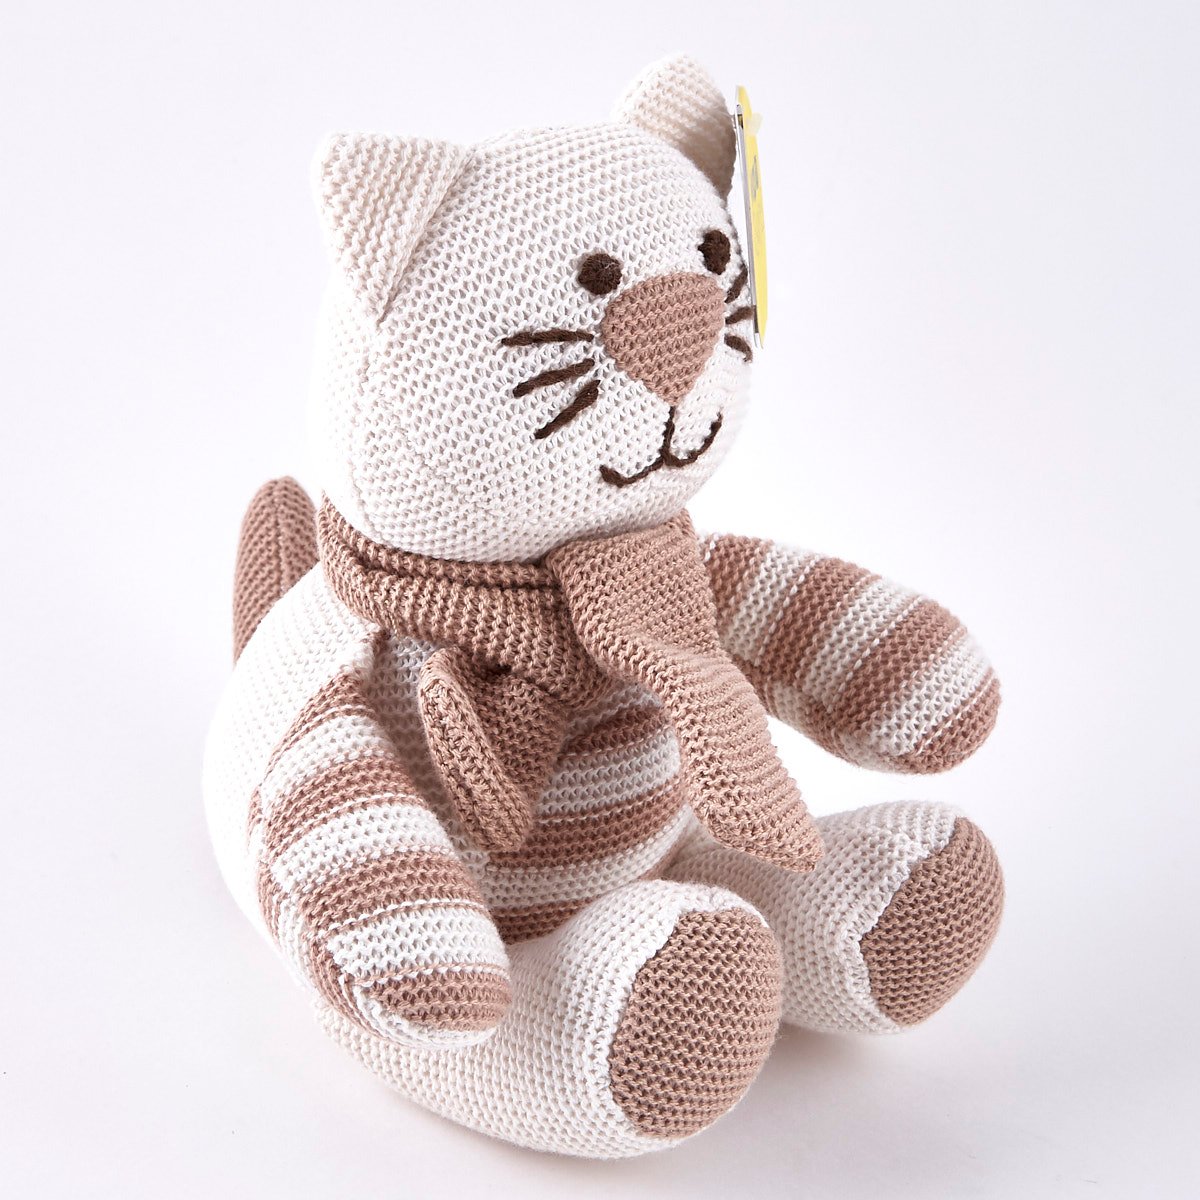 Tiny Treasures Striped Cream & Beige Cat with Scarf